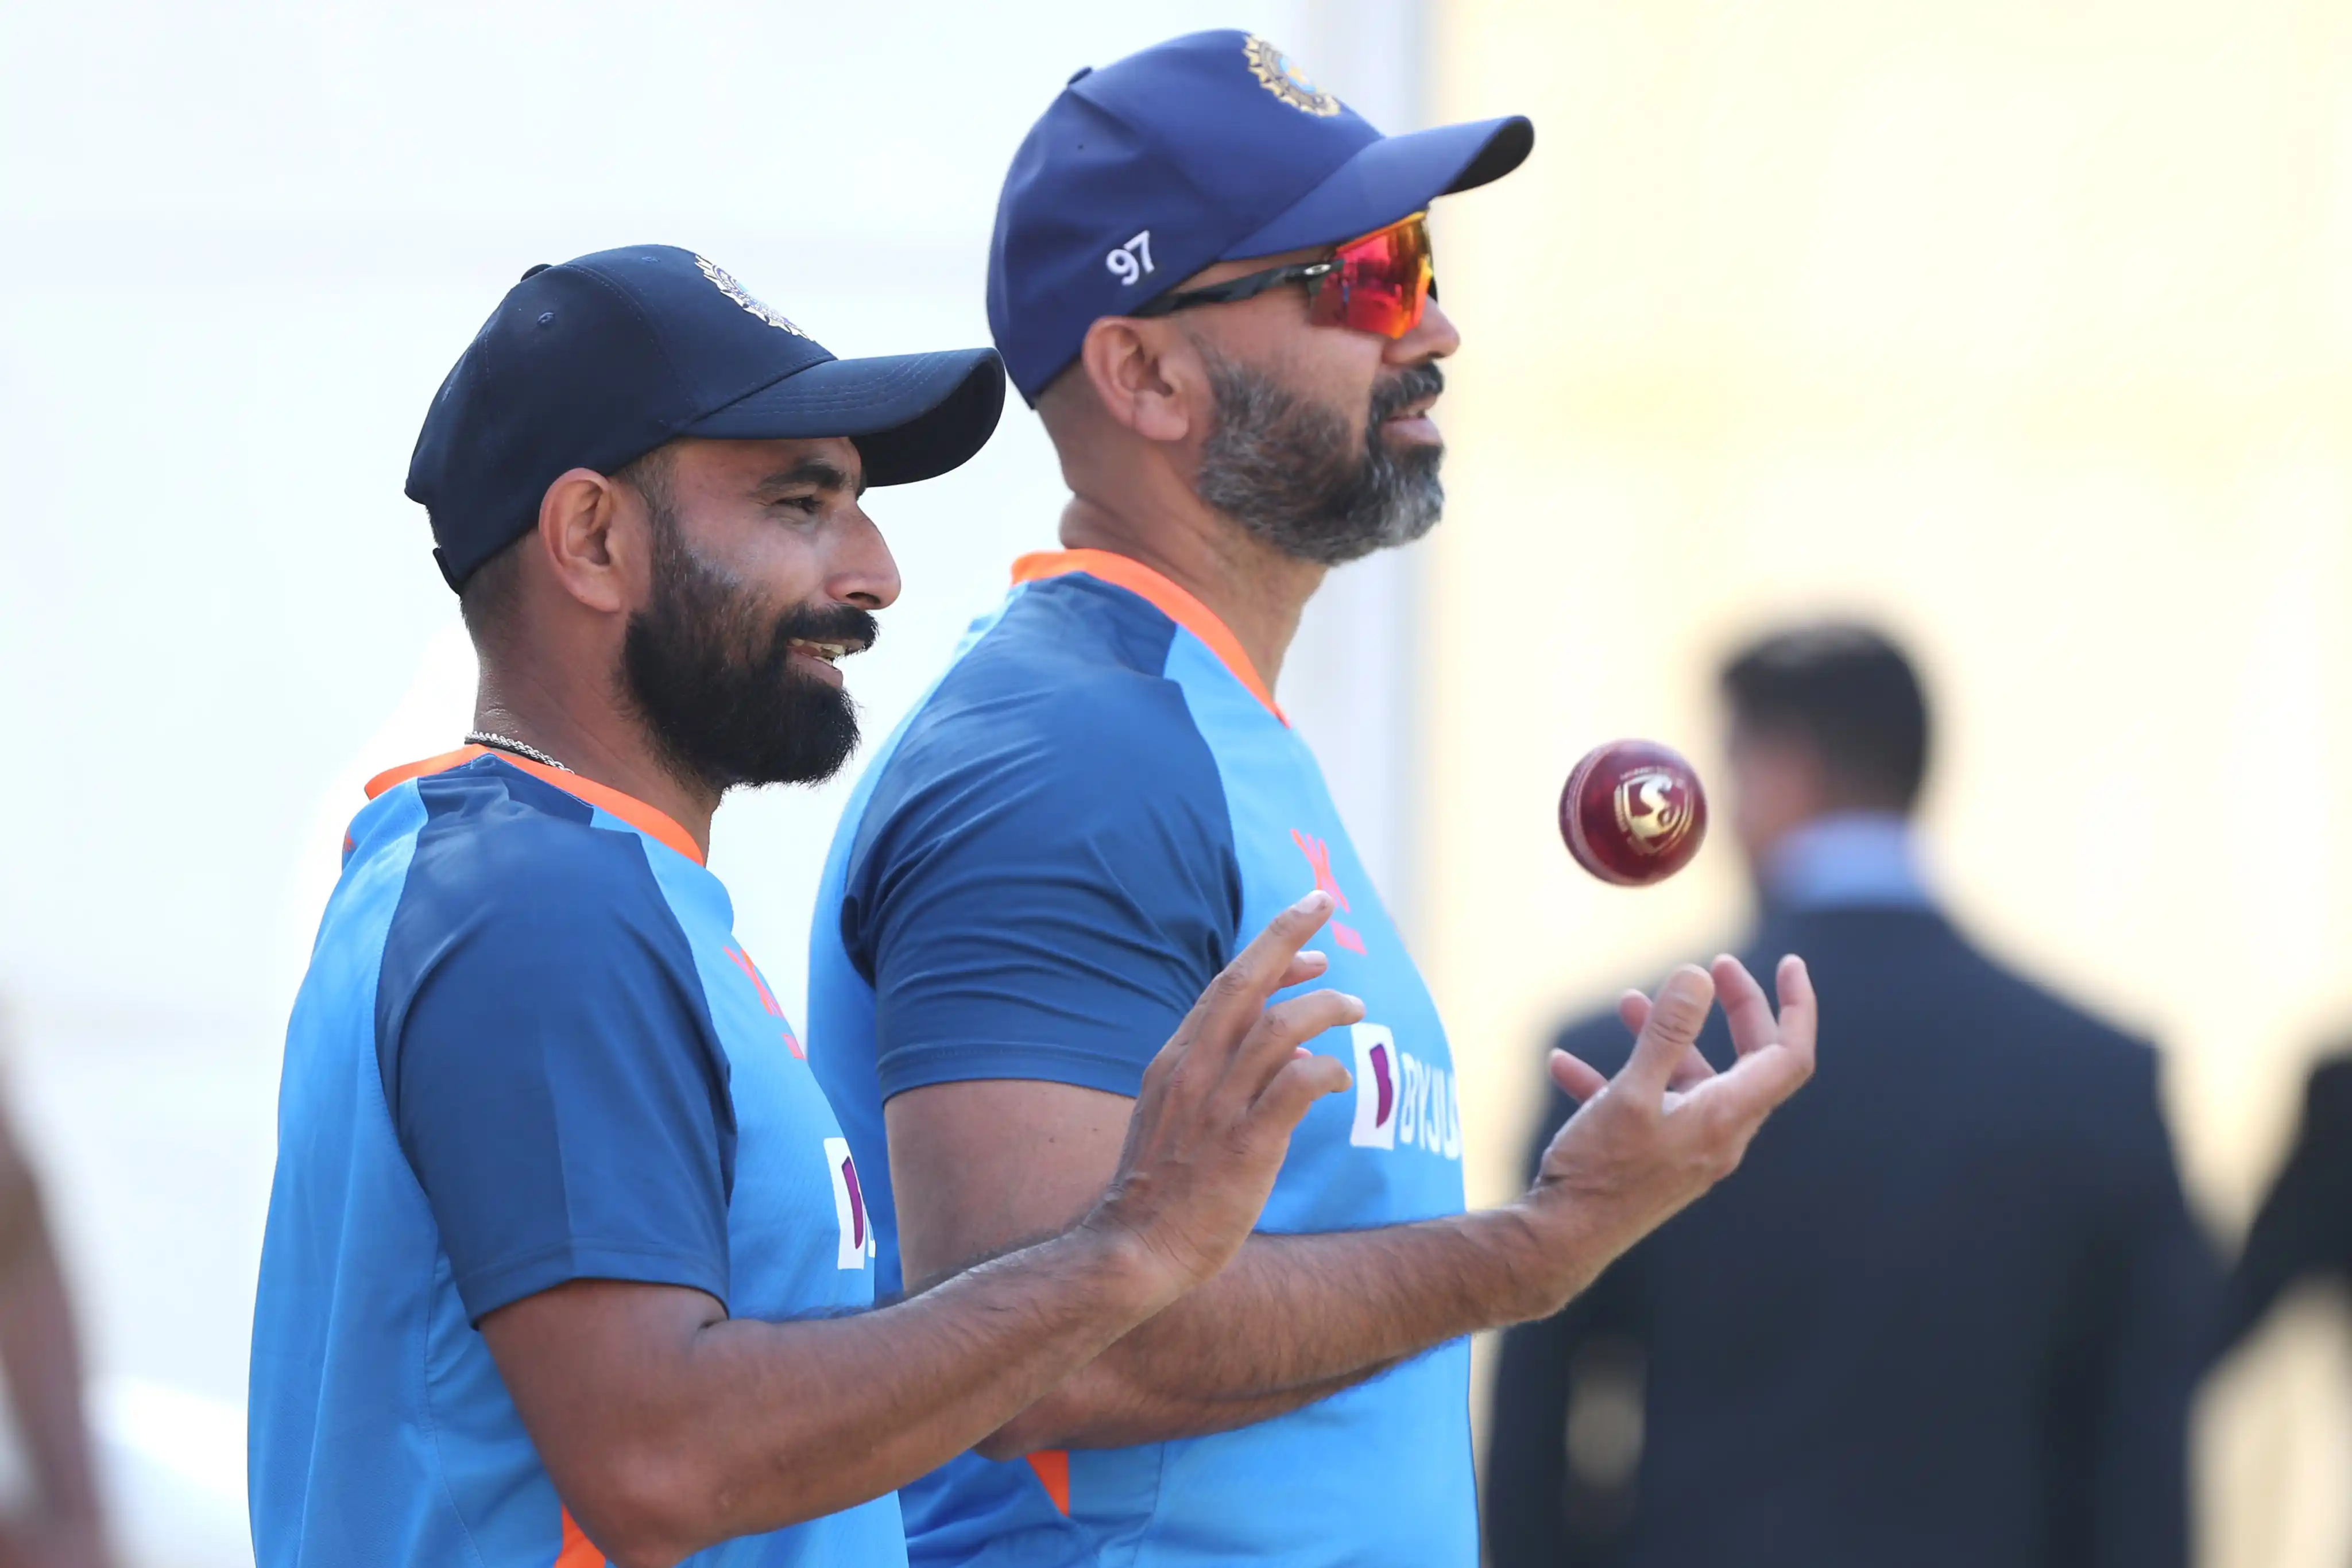 Team India players practice 